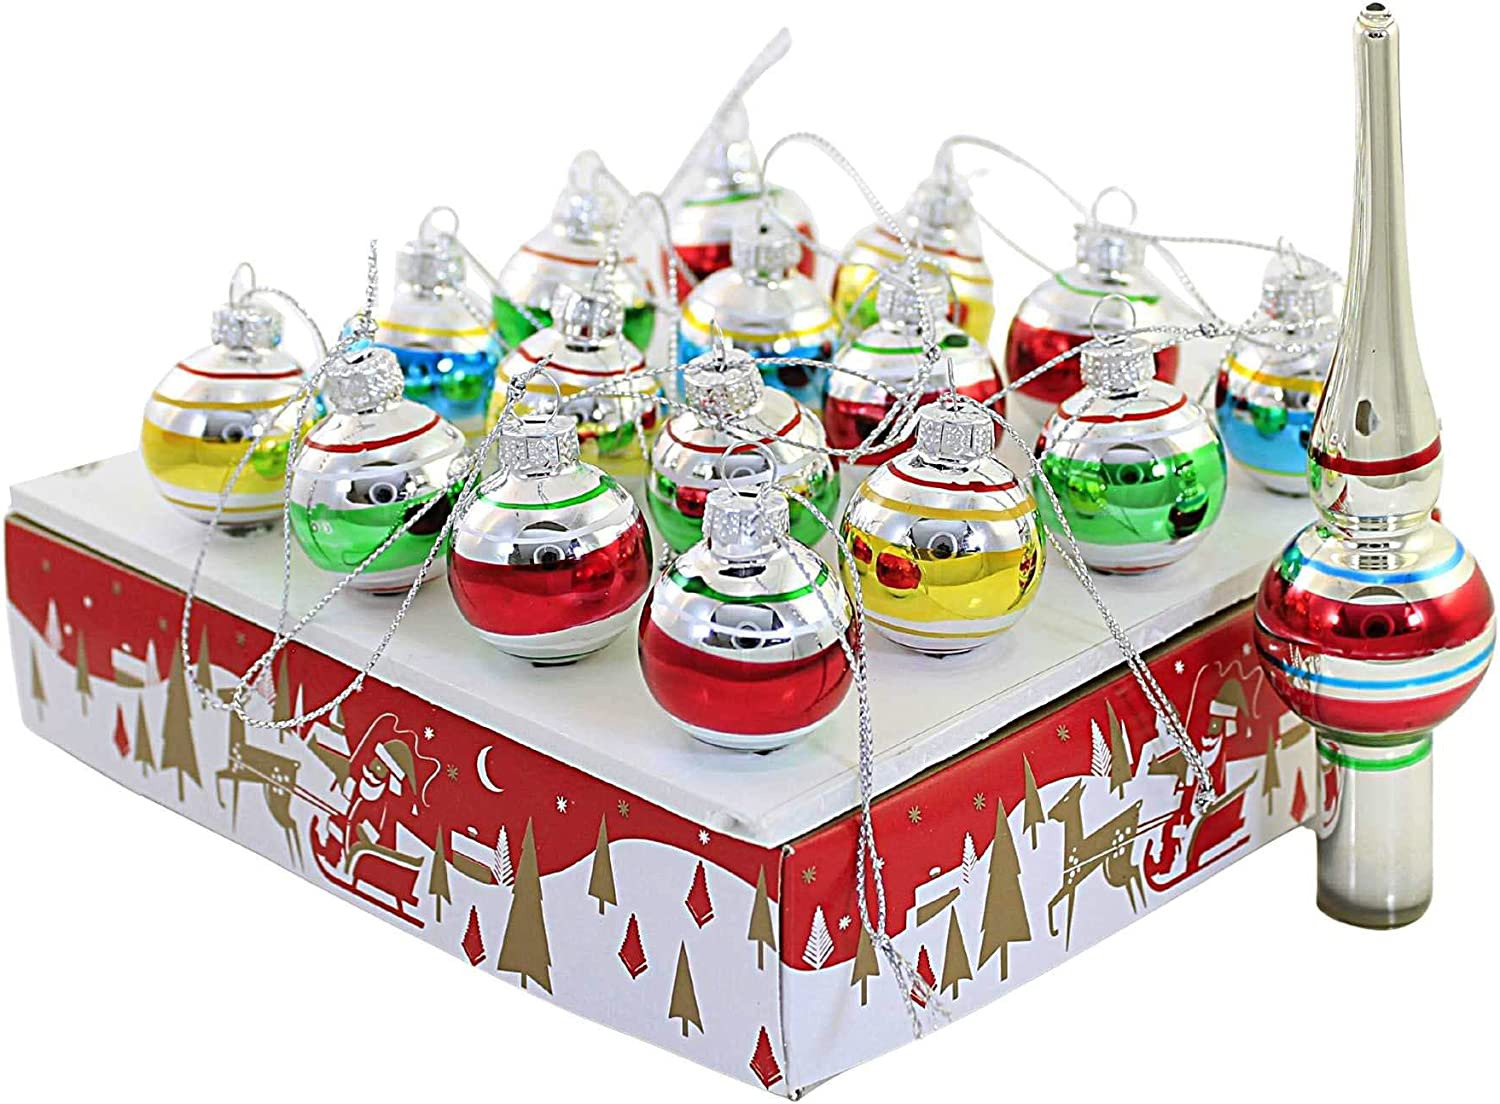 Kurt Adler Miniature Ornaments and Treetop, Set of 16